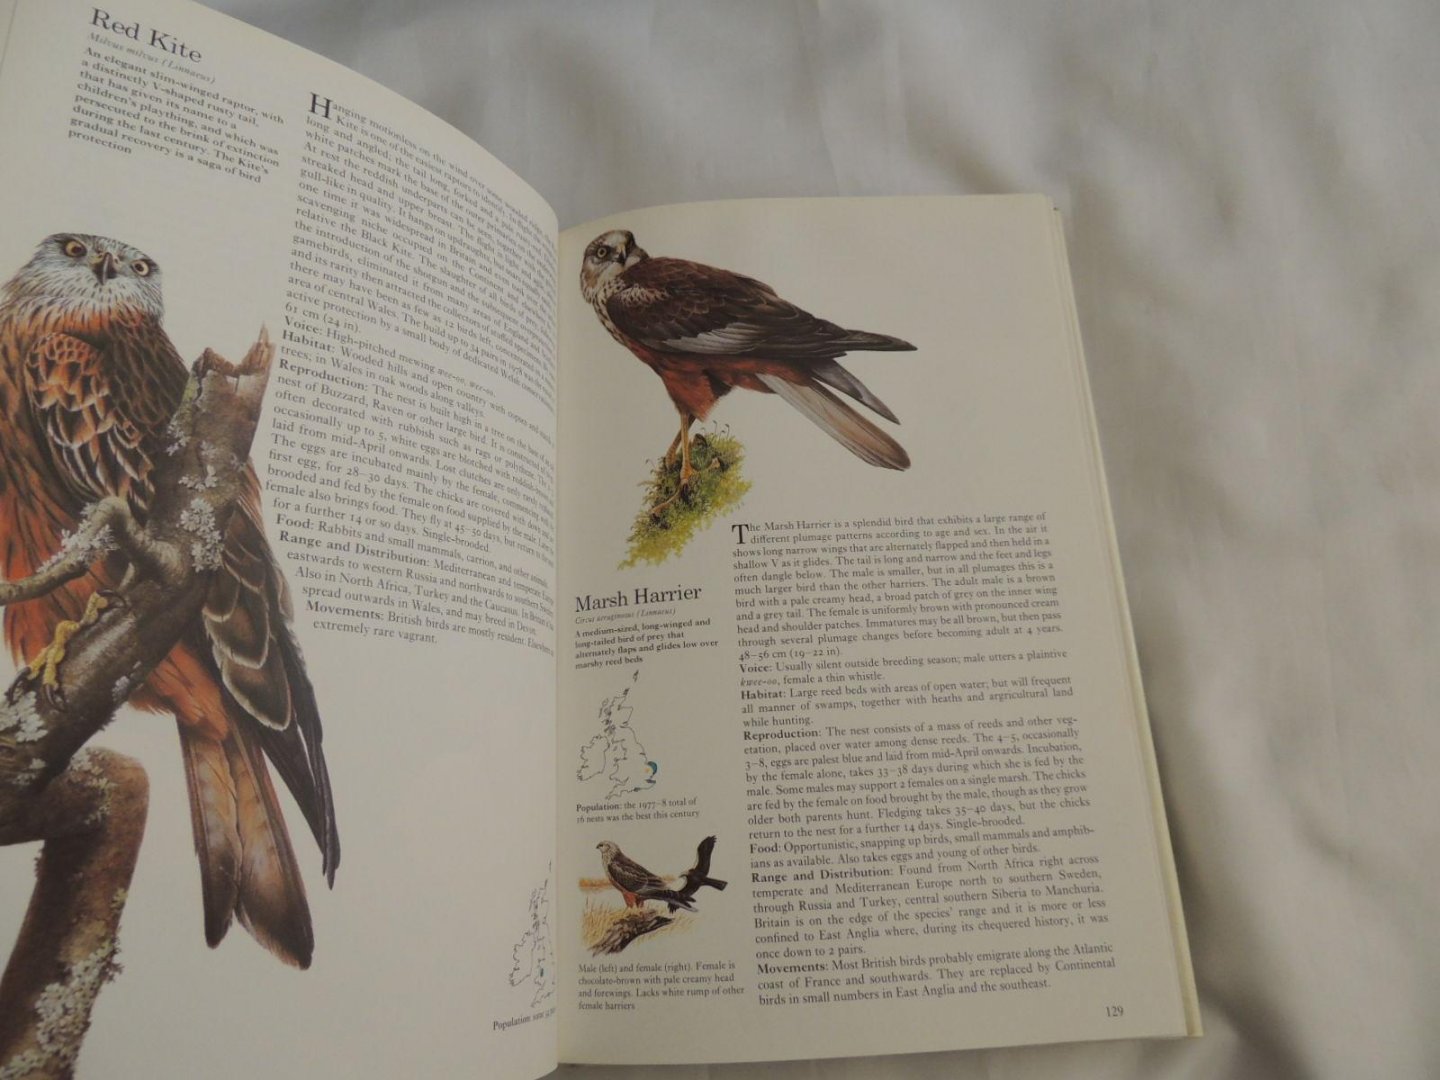 John Gooders; Terence Lambert - norman arlott - COLLINS BRITISH BIRDS